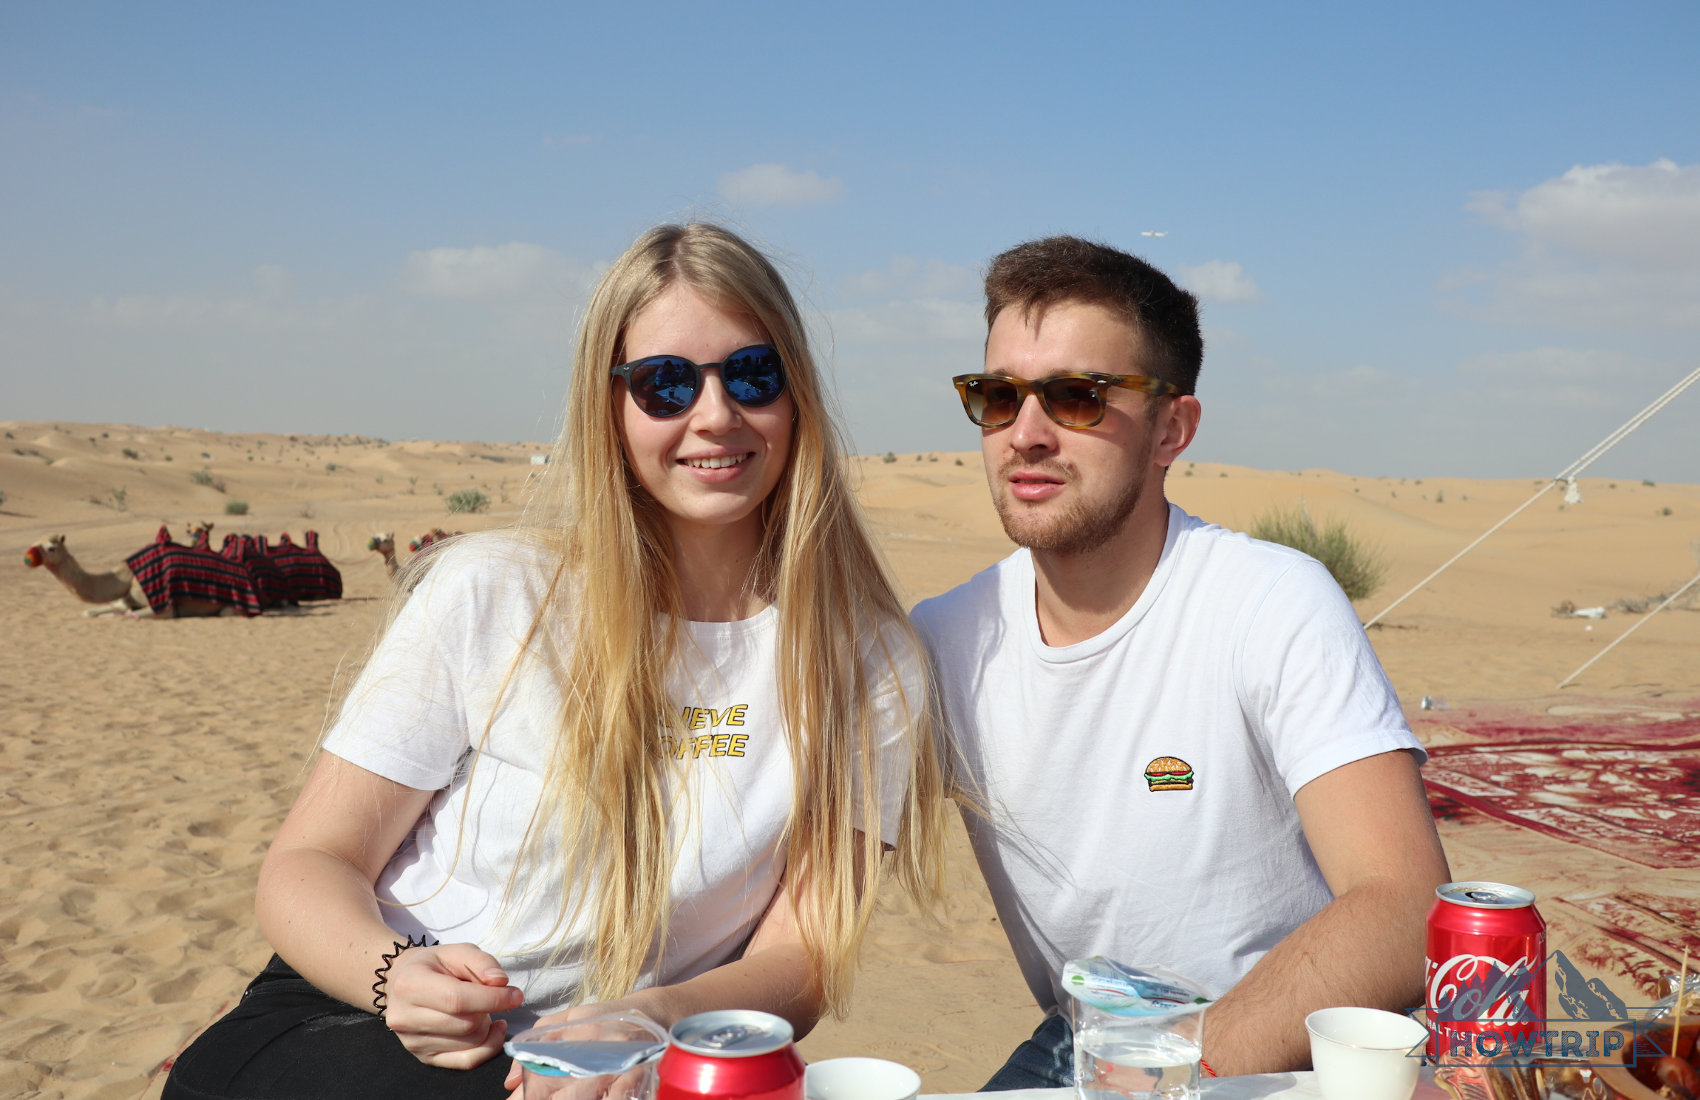 Сафари в пустыне обед